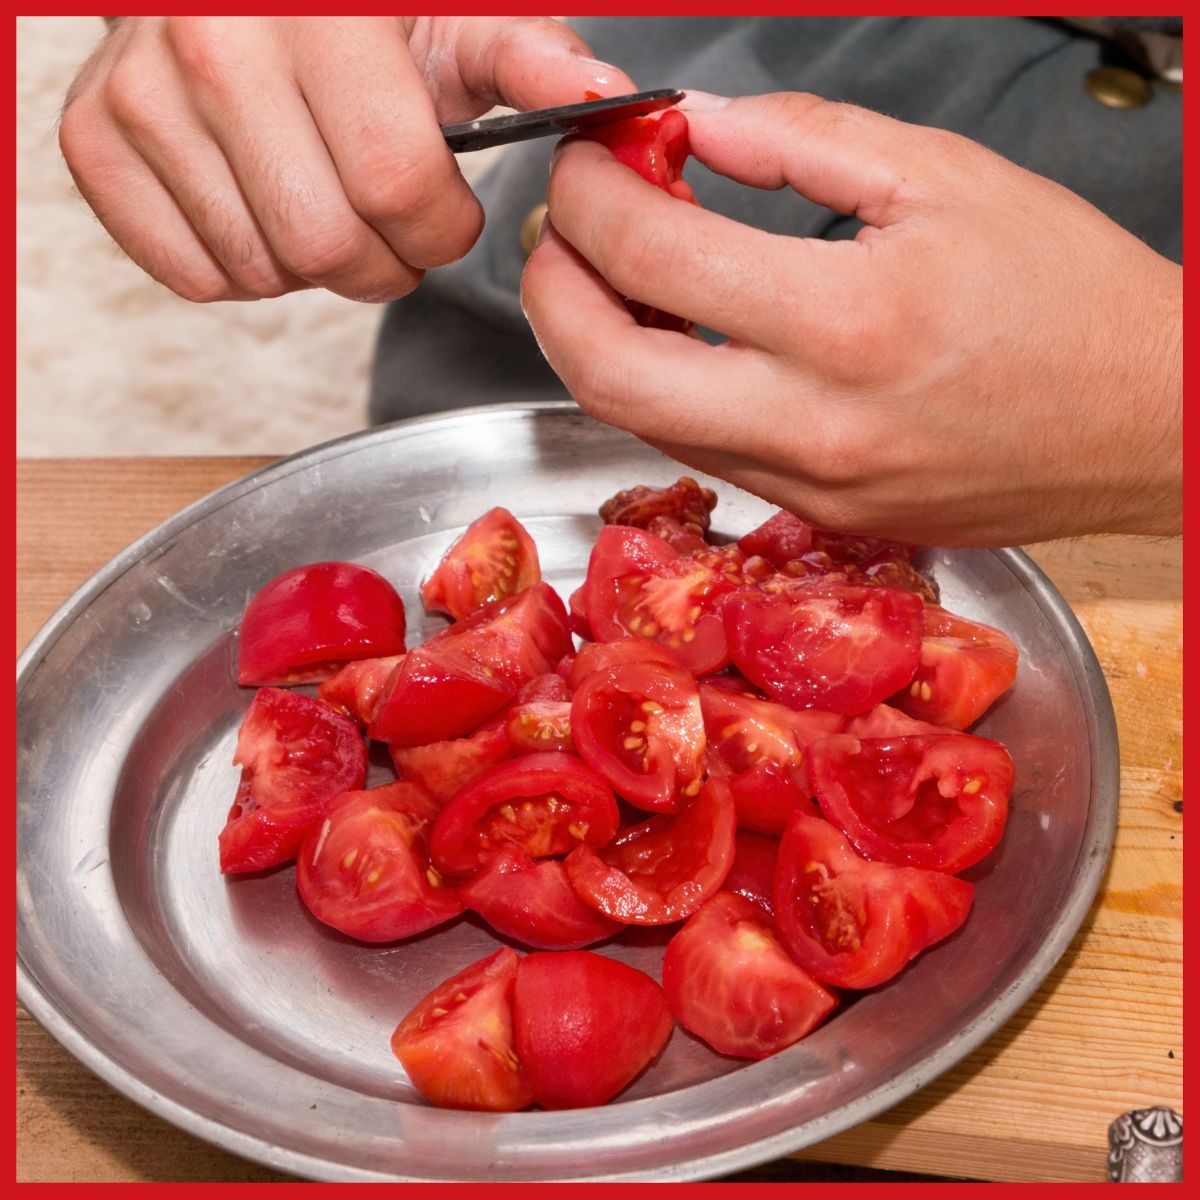 hands peeling tomatoes